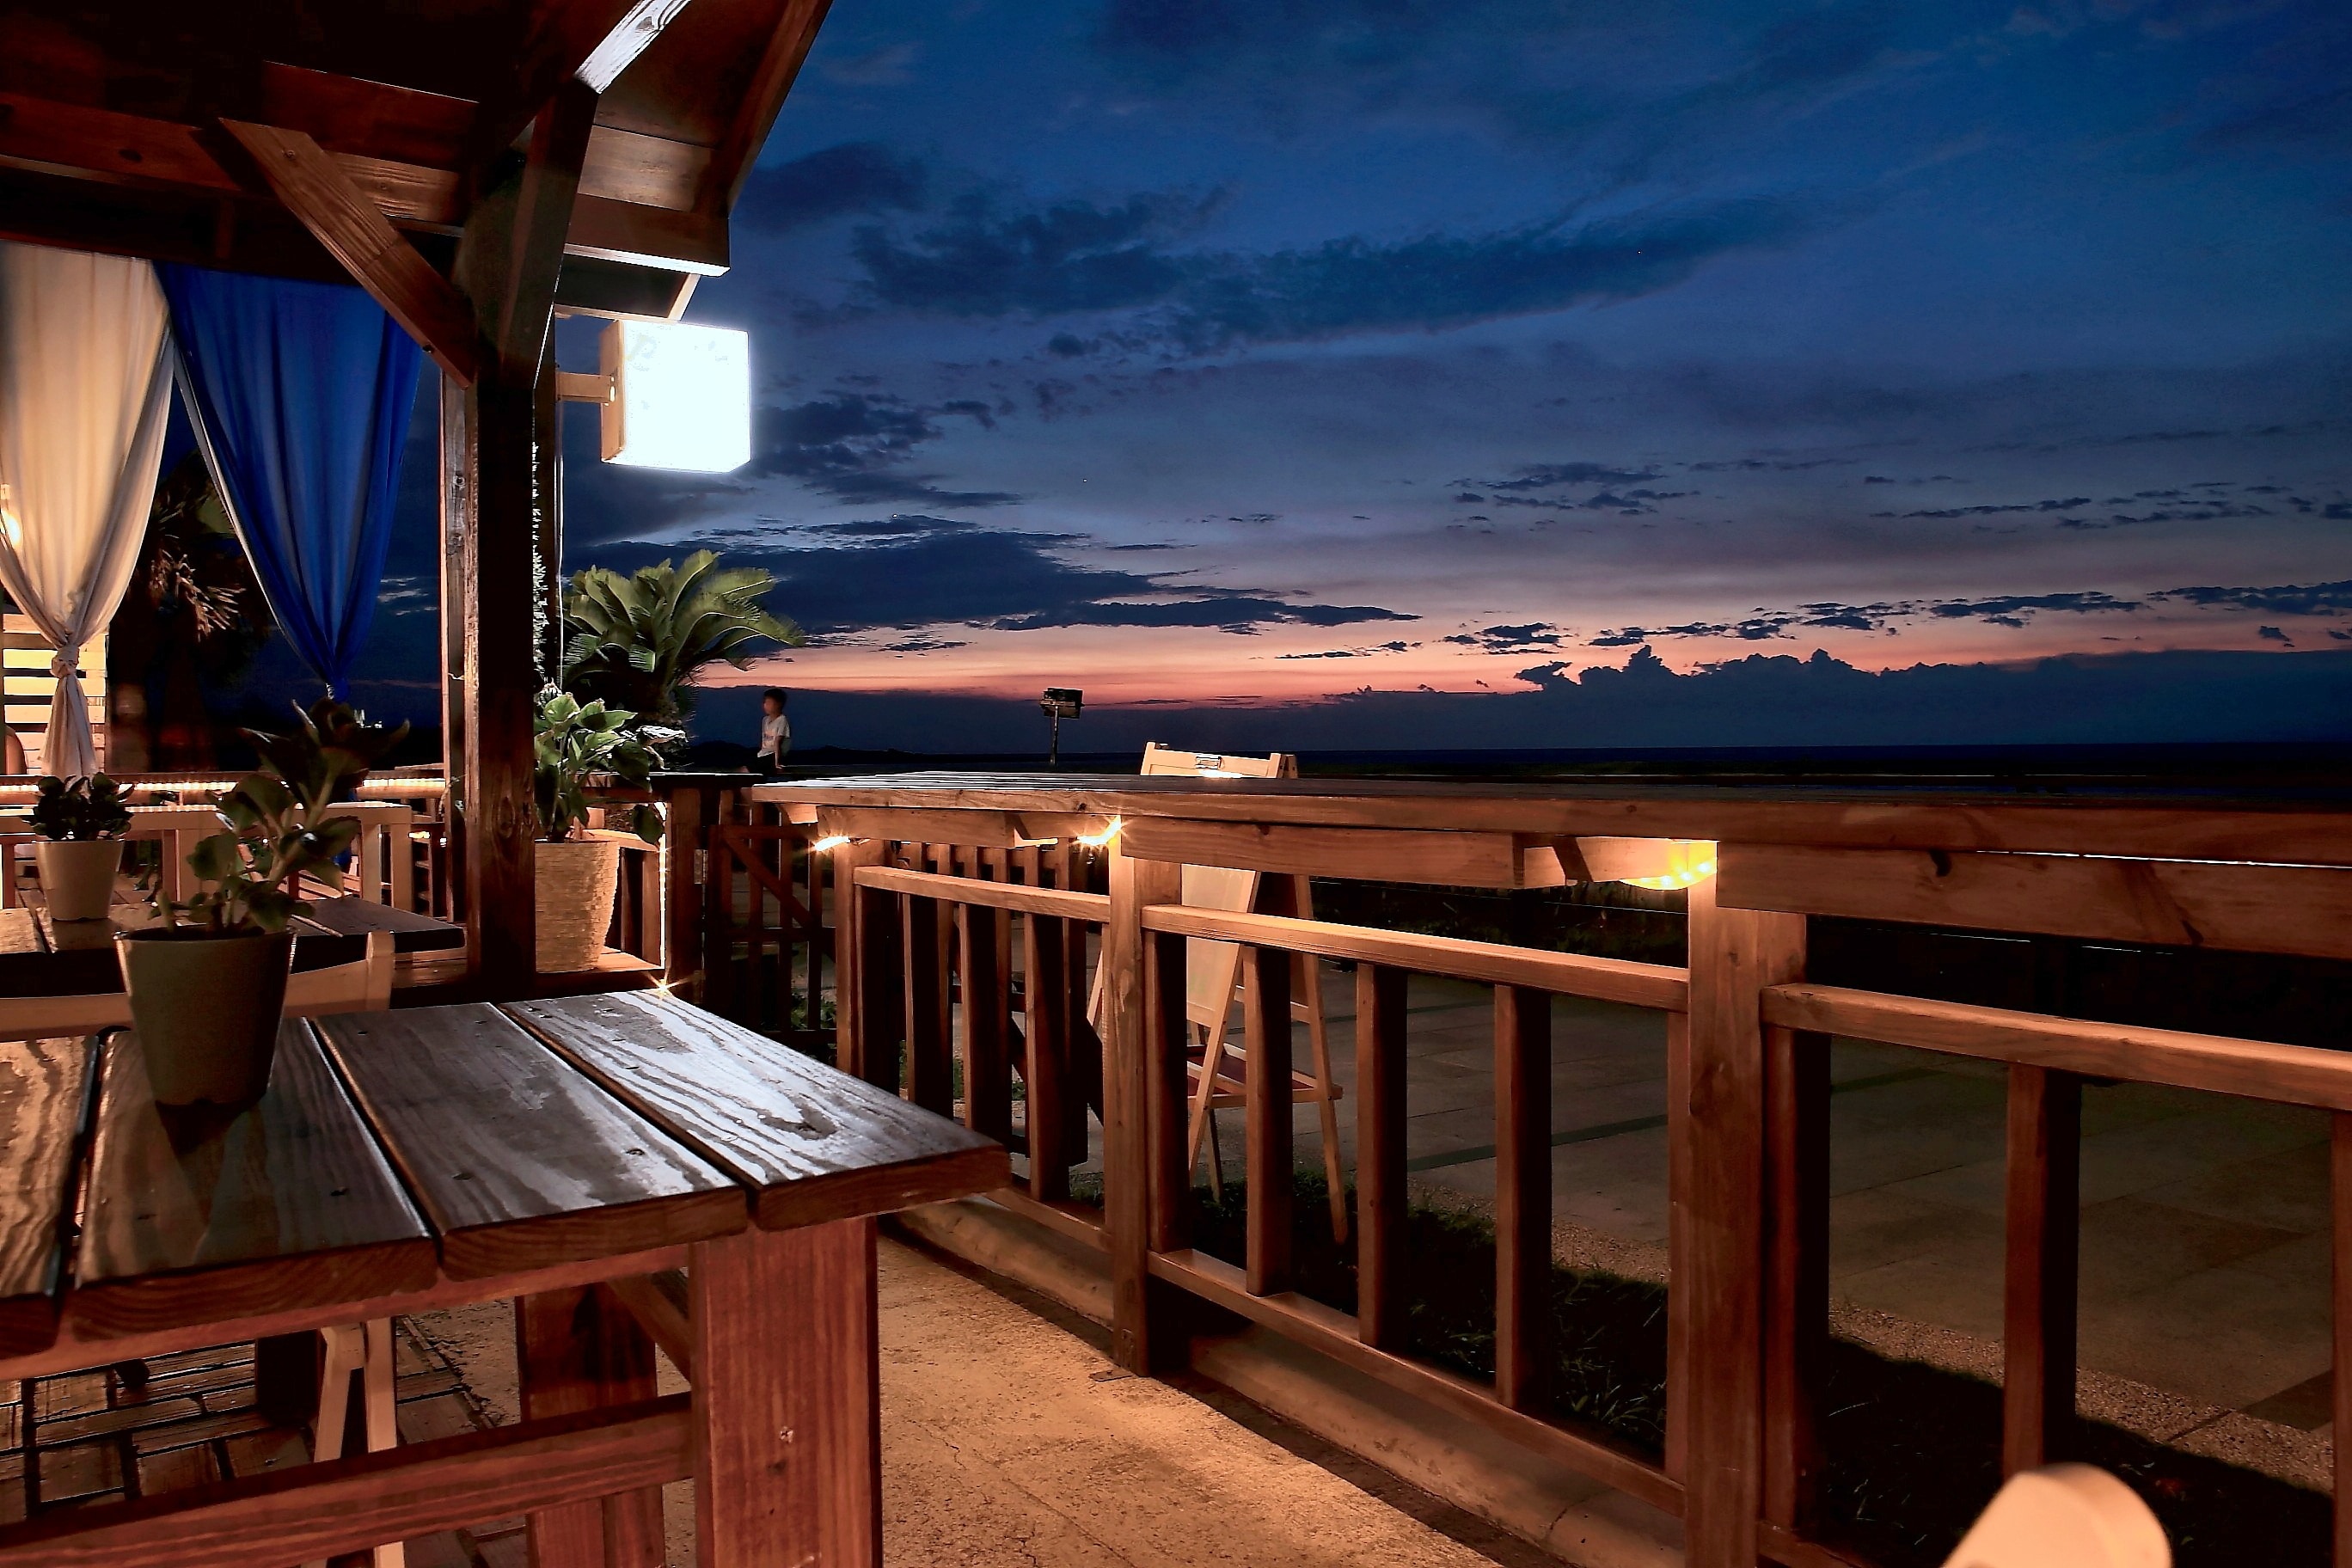 Beach House, Restaurant, View, Sunset, dusk, wood - material